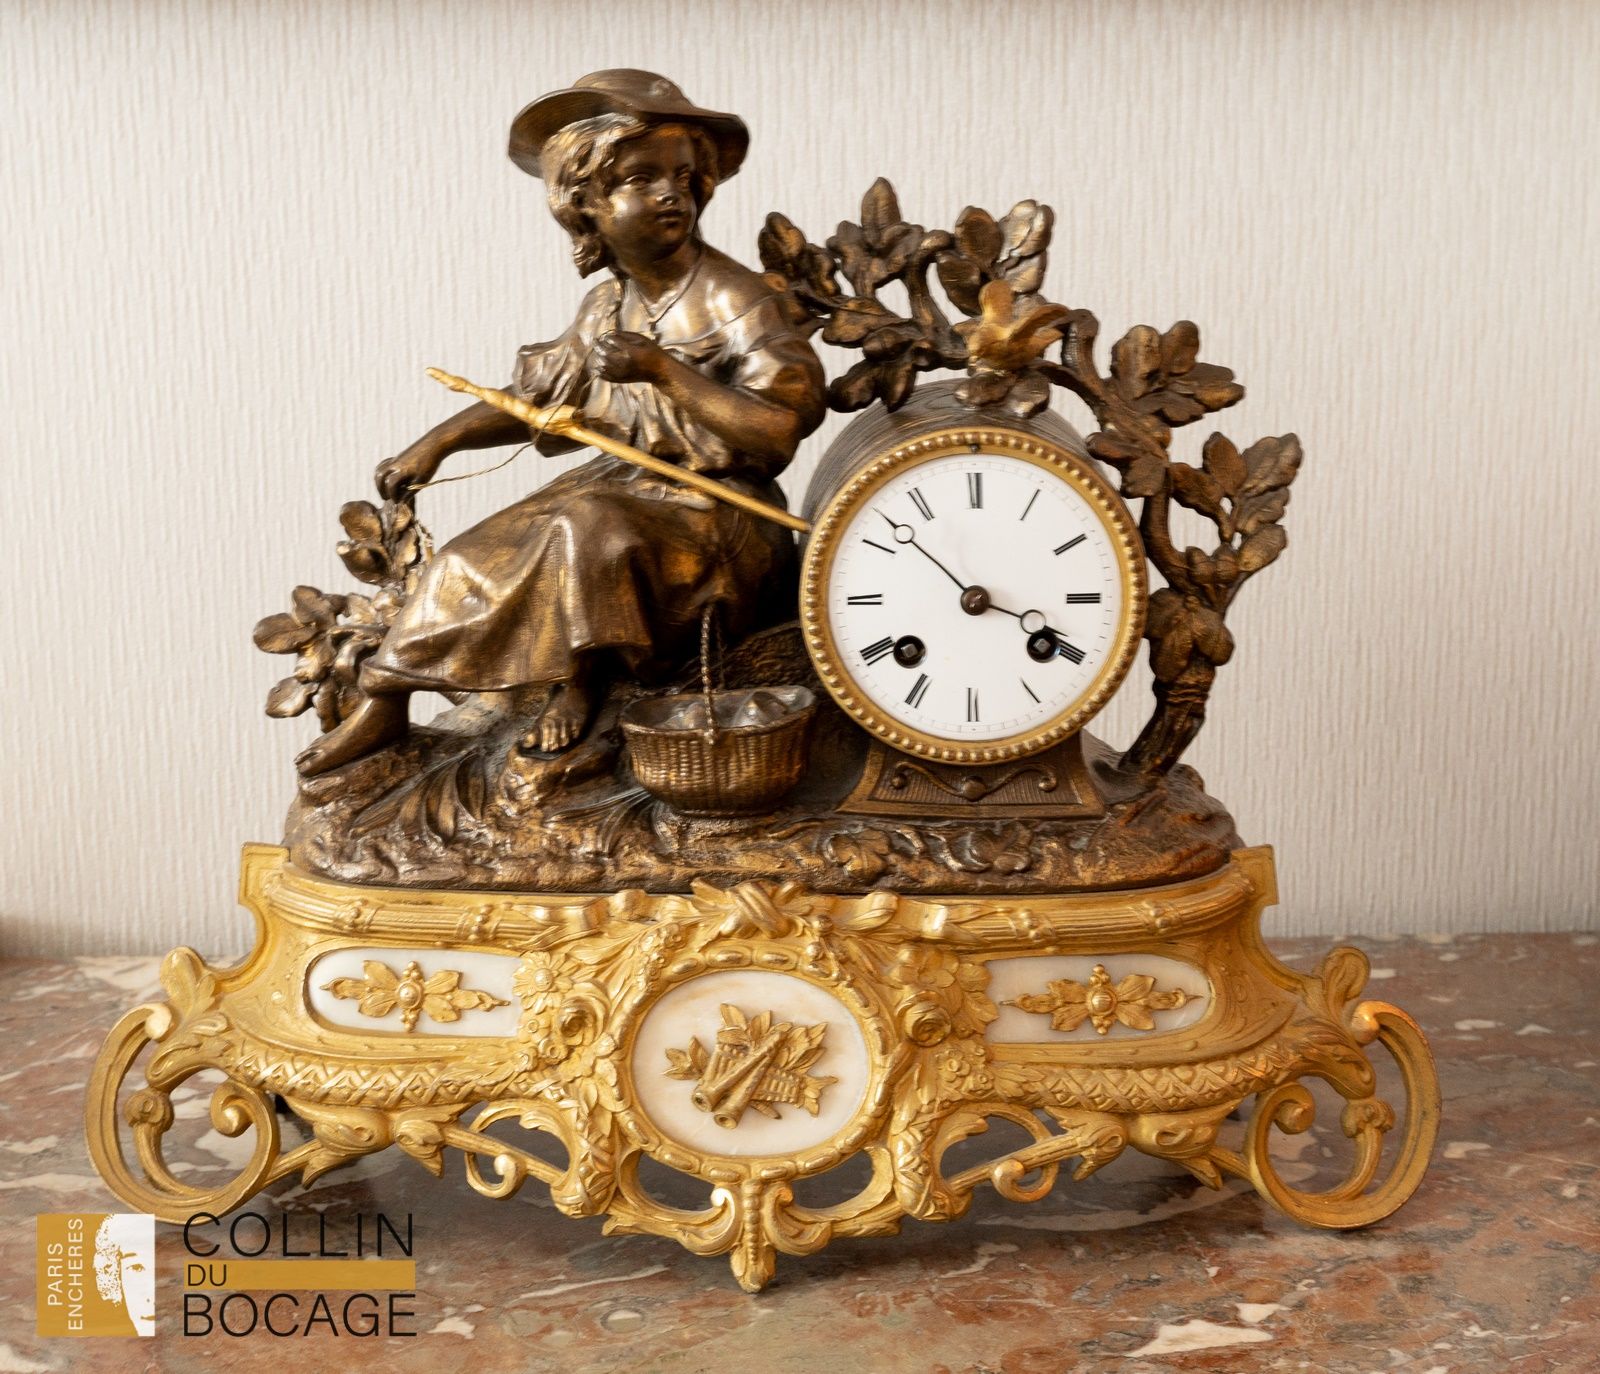 Null 显示旋转器的时钟
 青铜釉面 
拿破仑三世时期
34 x 40 厘米